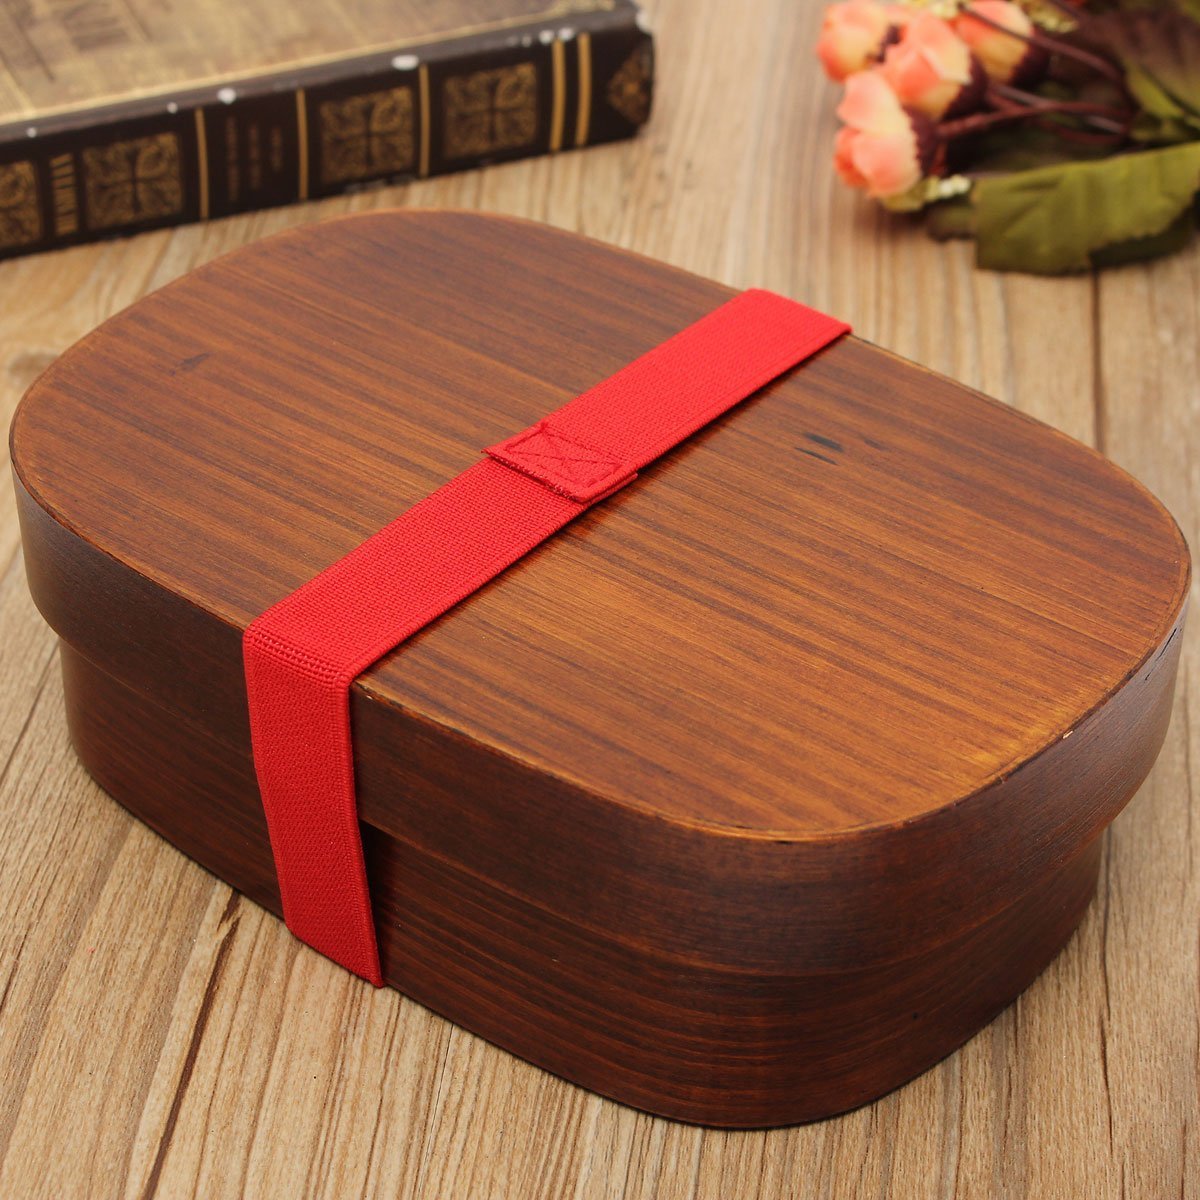 Japanese-style Wooden Bento Box